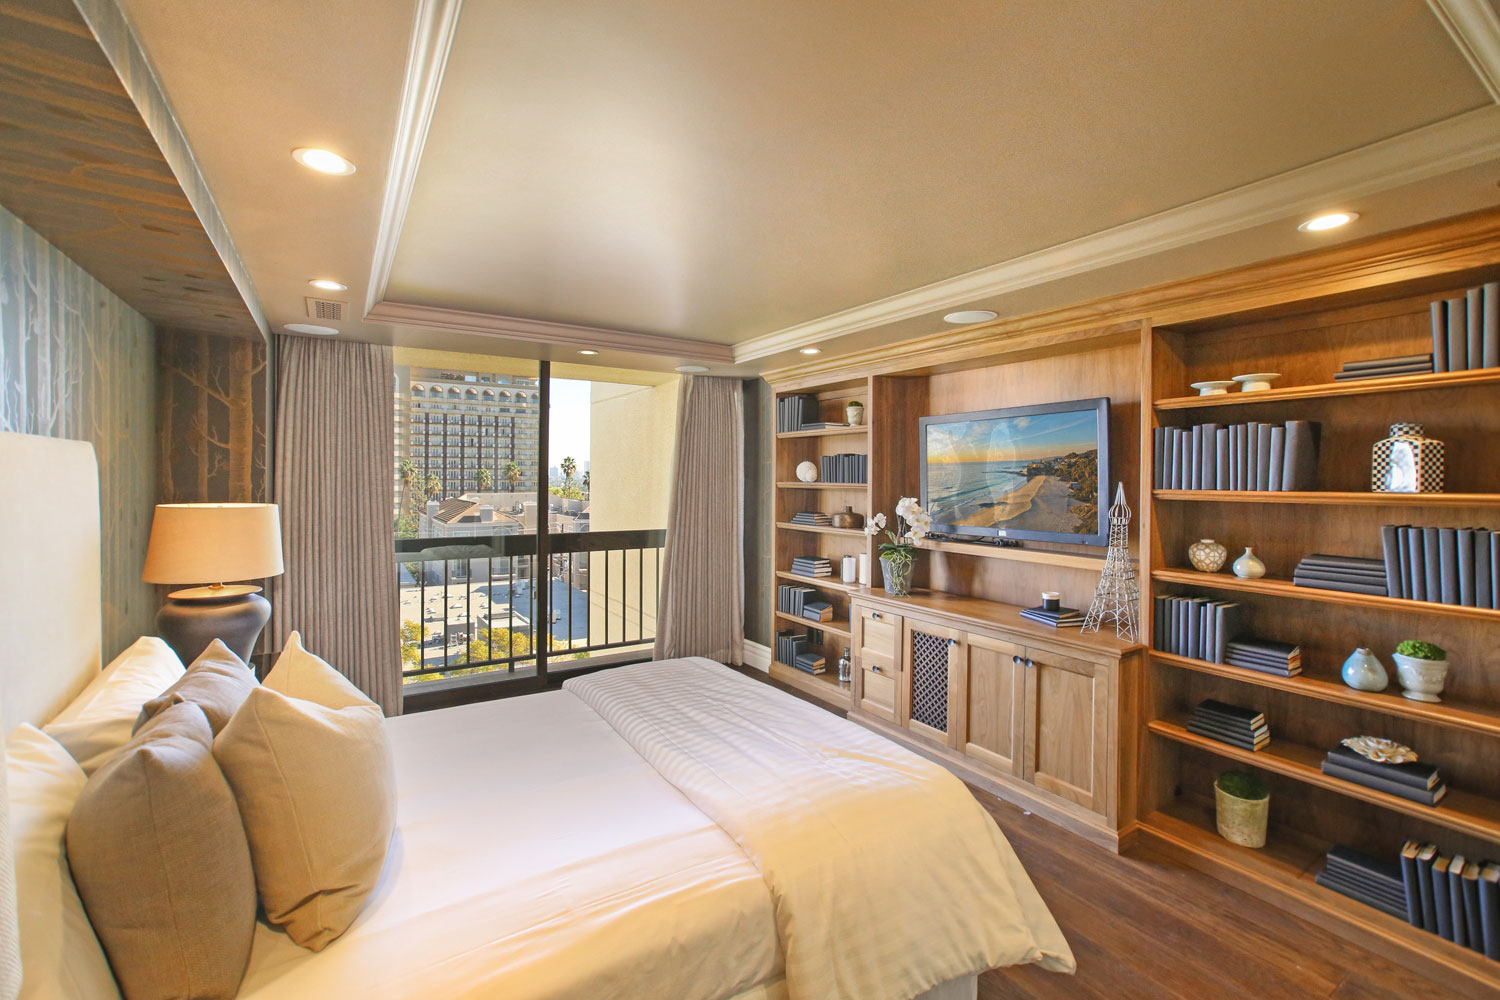 10-bedroom-built-in-shelves-tray-ceiling-gary-drake-general-contractor.jpg